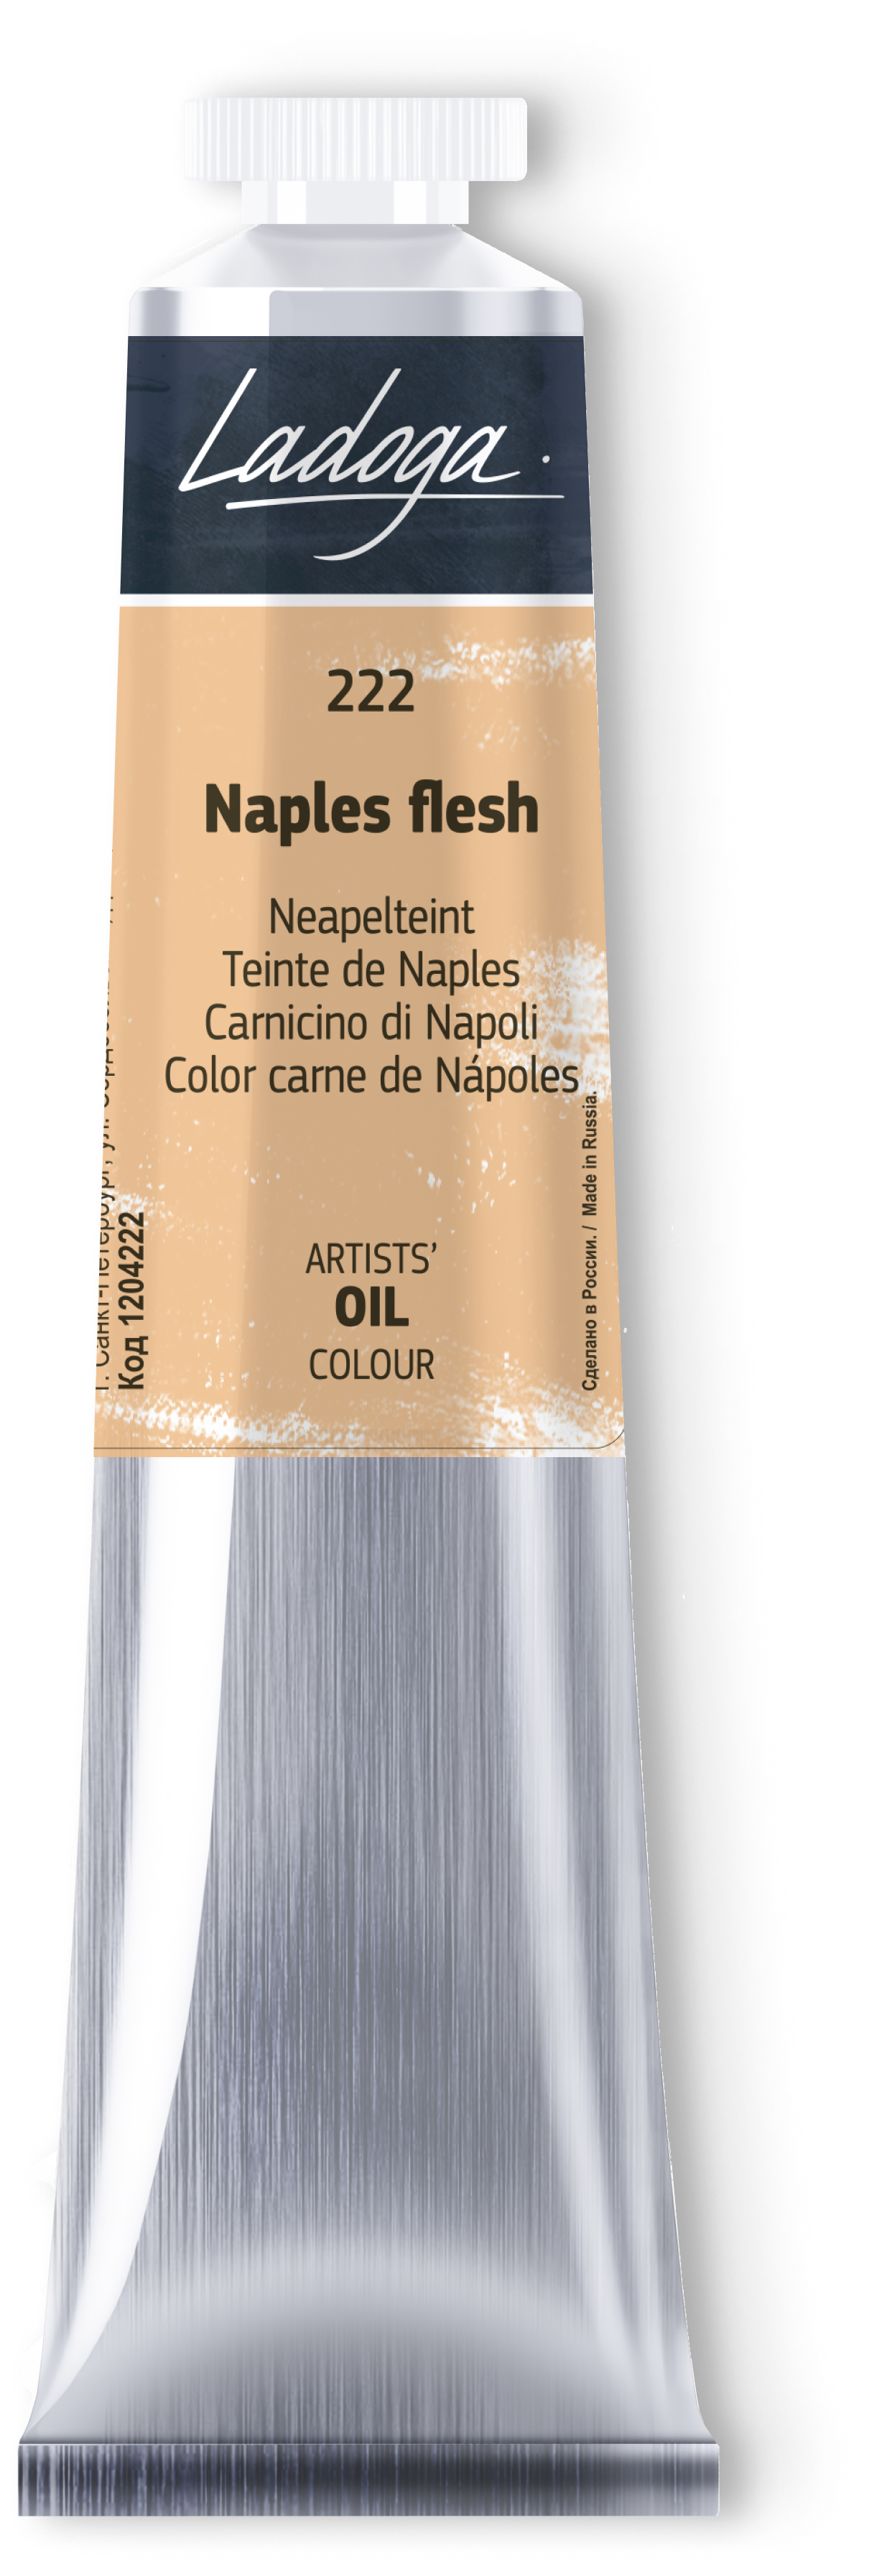 Oil colour "Ladoga", Naples flesh, tube, № 222